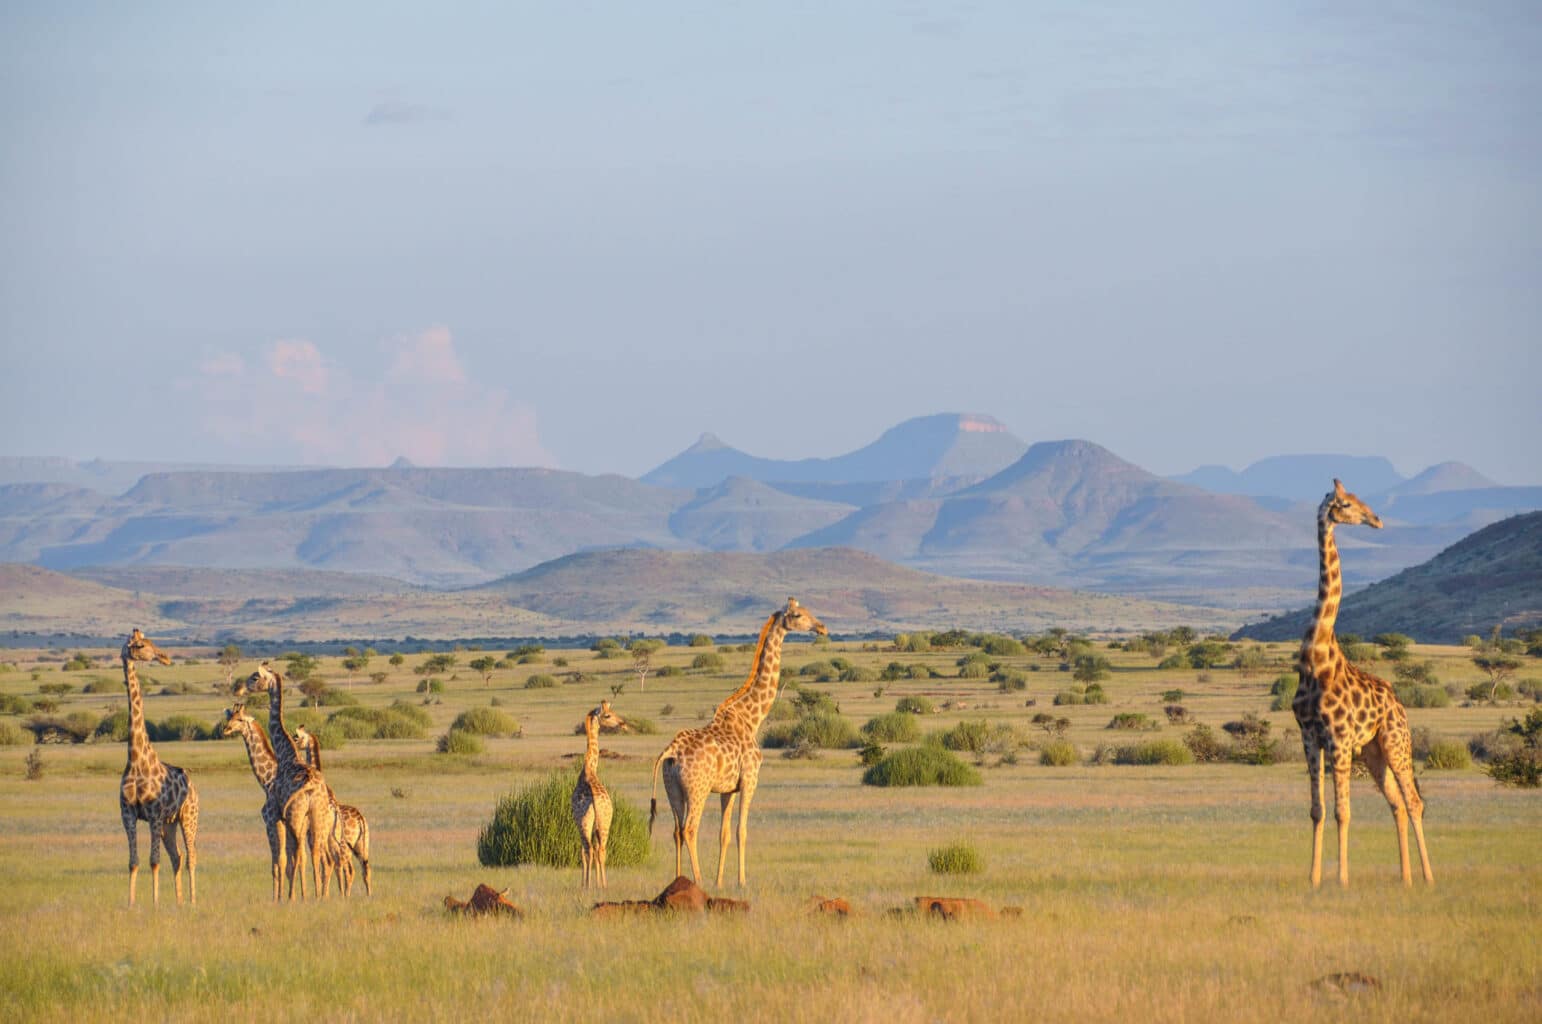 Giraffes in the wild in Namibia.